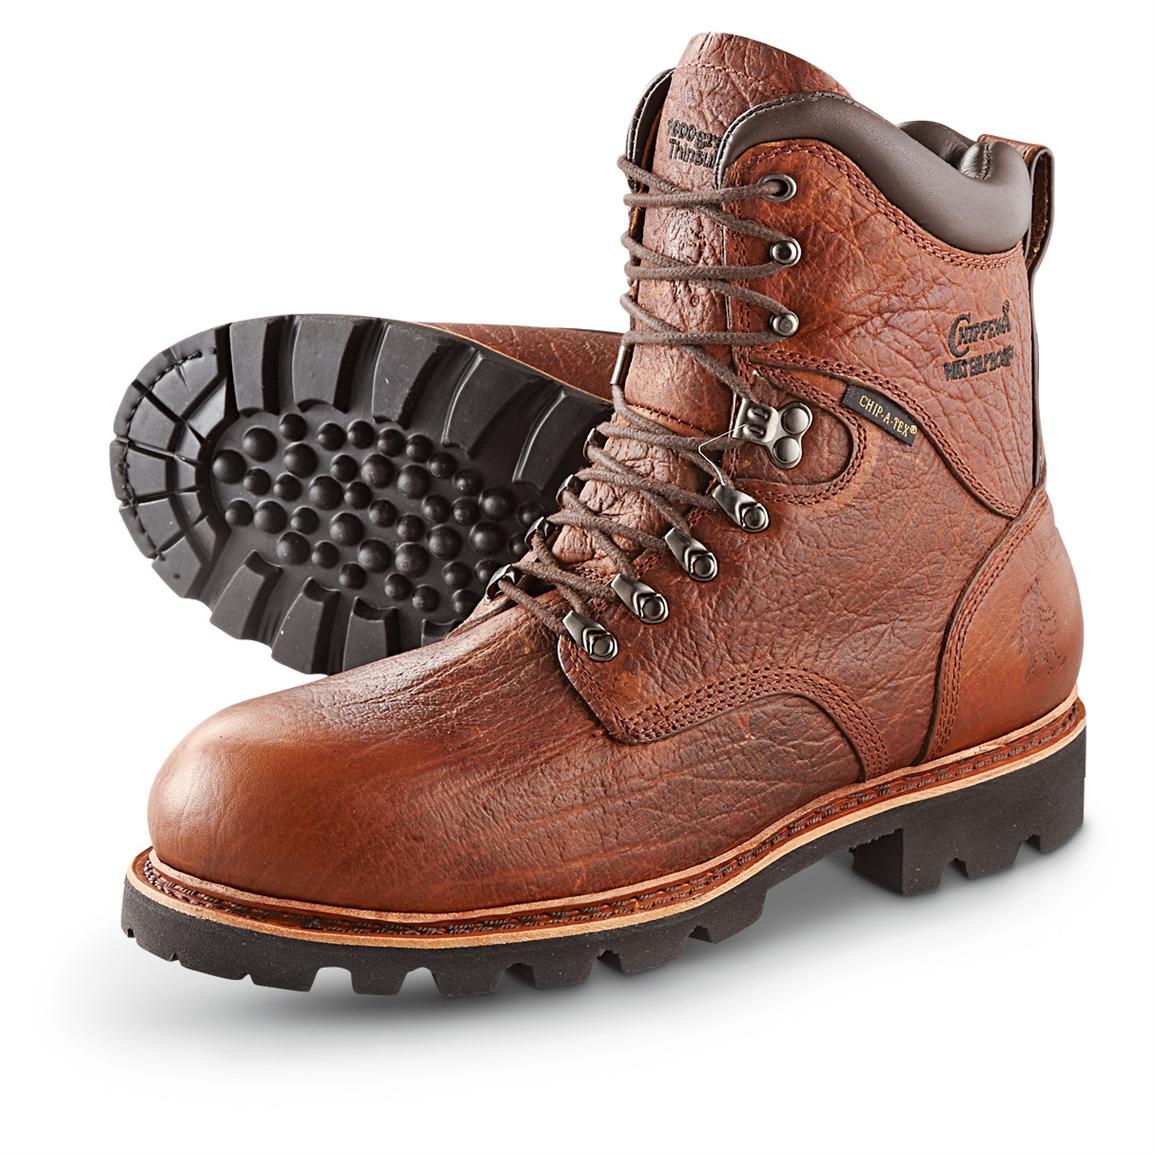 Men's Chippewa Boots® 8